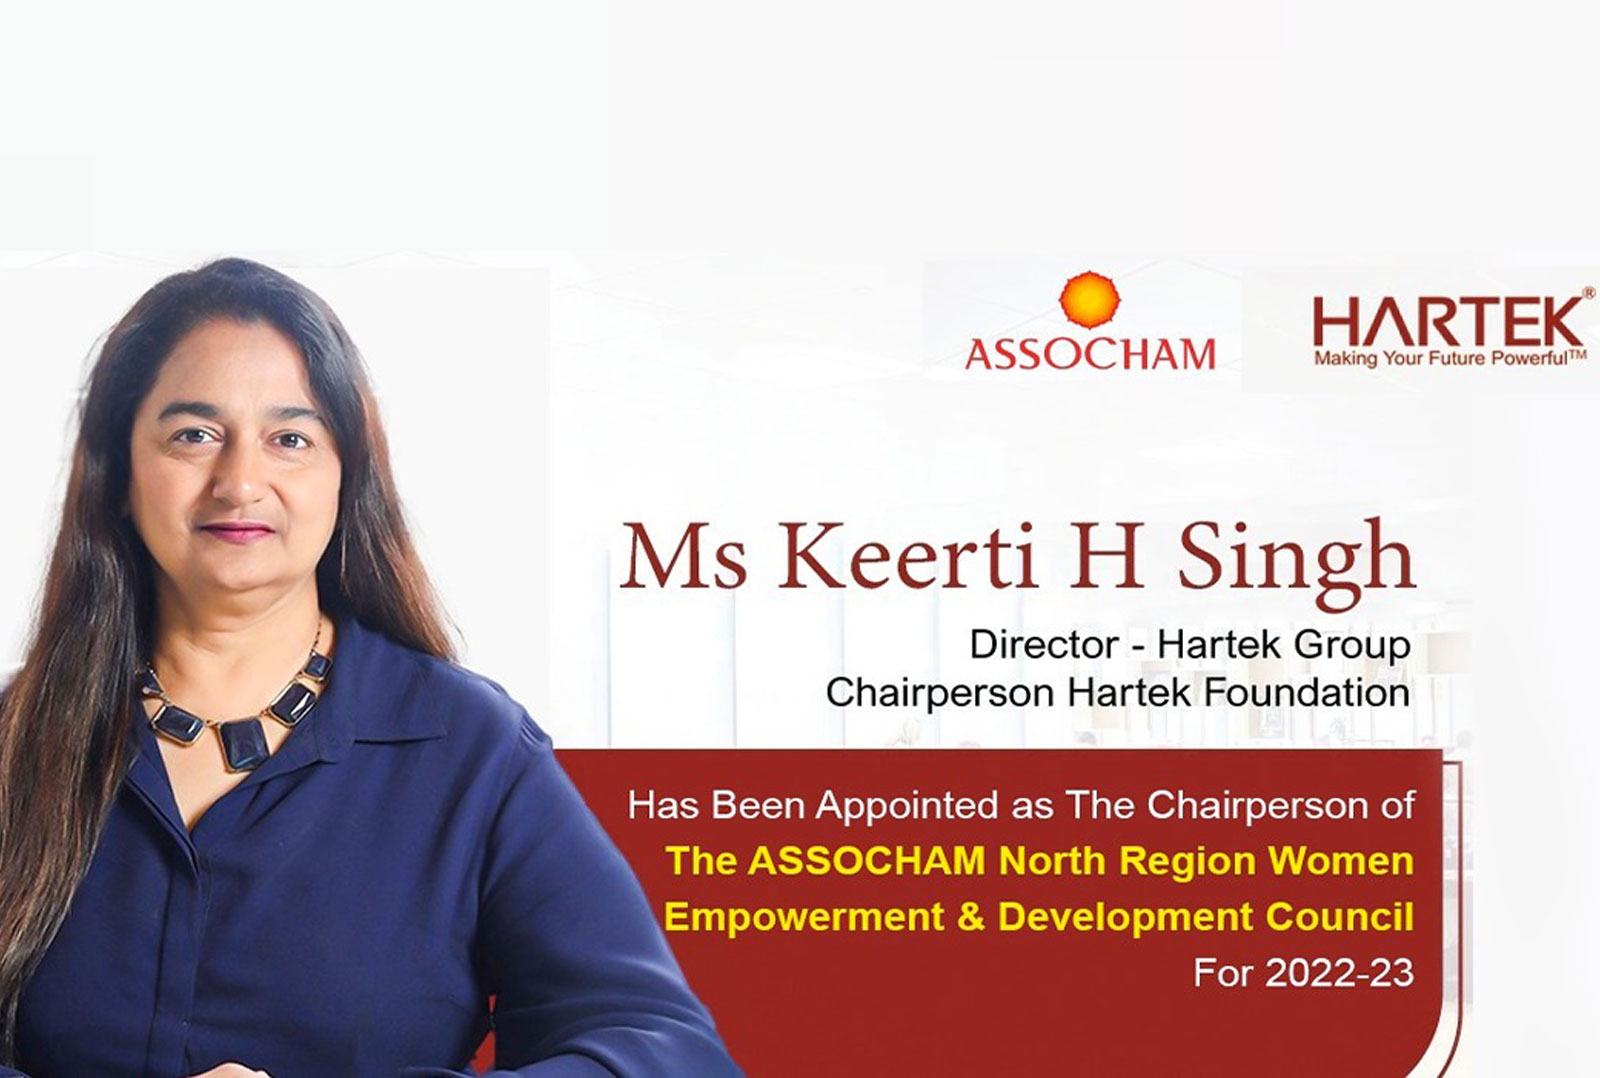 Assocham appoints Keerti H Singh as Chairperson ASSOCHAM North Region Women Development Council 2022-23.